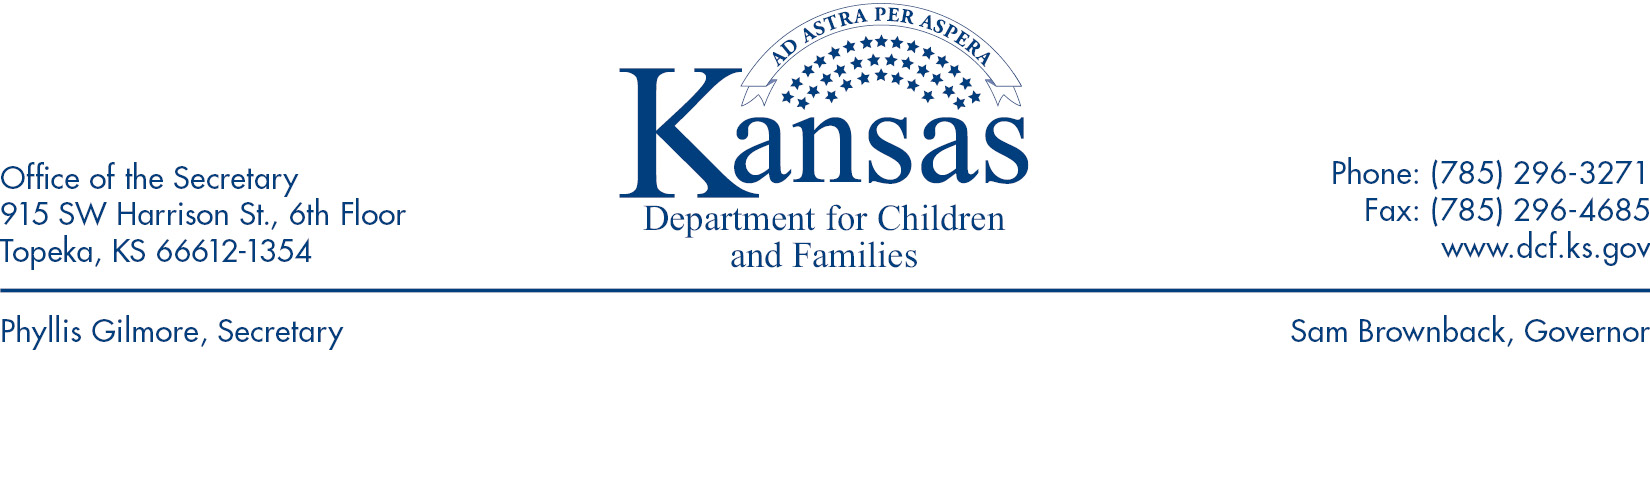 Title: Leterhead Image Descriptoin: Kansas Department for children and Families Office of the Secretary 915 SW Hrrision ST., cth Floor Tobeka Kansas 66612-1354 Phone:785-296-3271 Fax: 785-296-4685 www.dcf.ks.gov Phyllis Gilmore, Secretary Sam Brownback, Governor